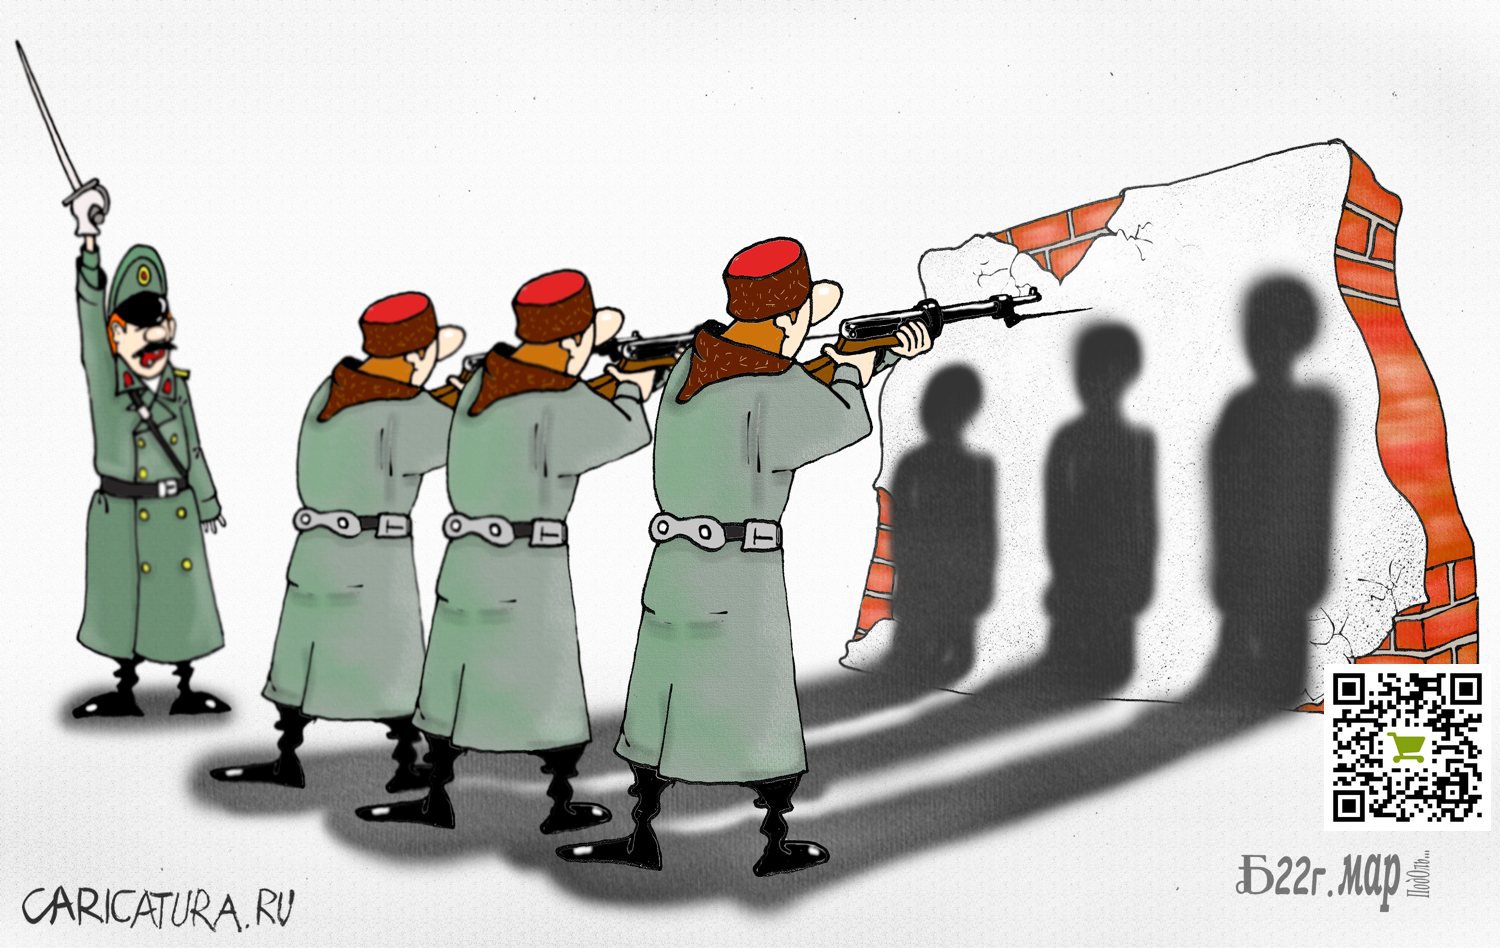 Карикатура "Про бой с тенью", Борис Демин